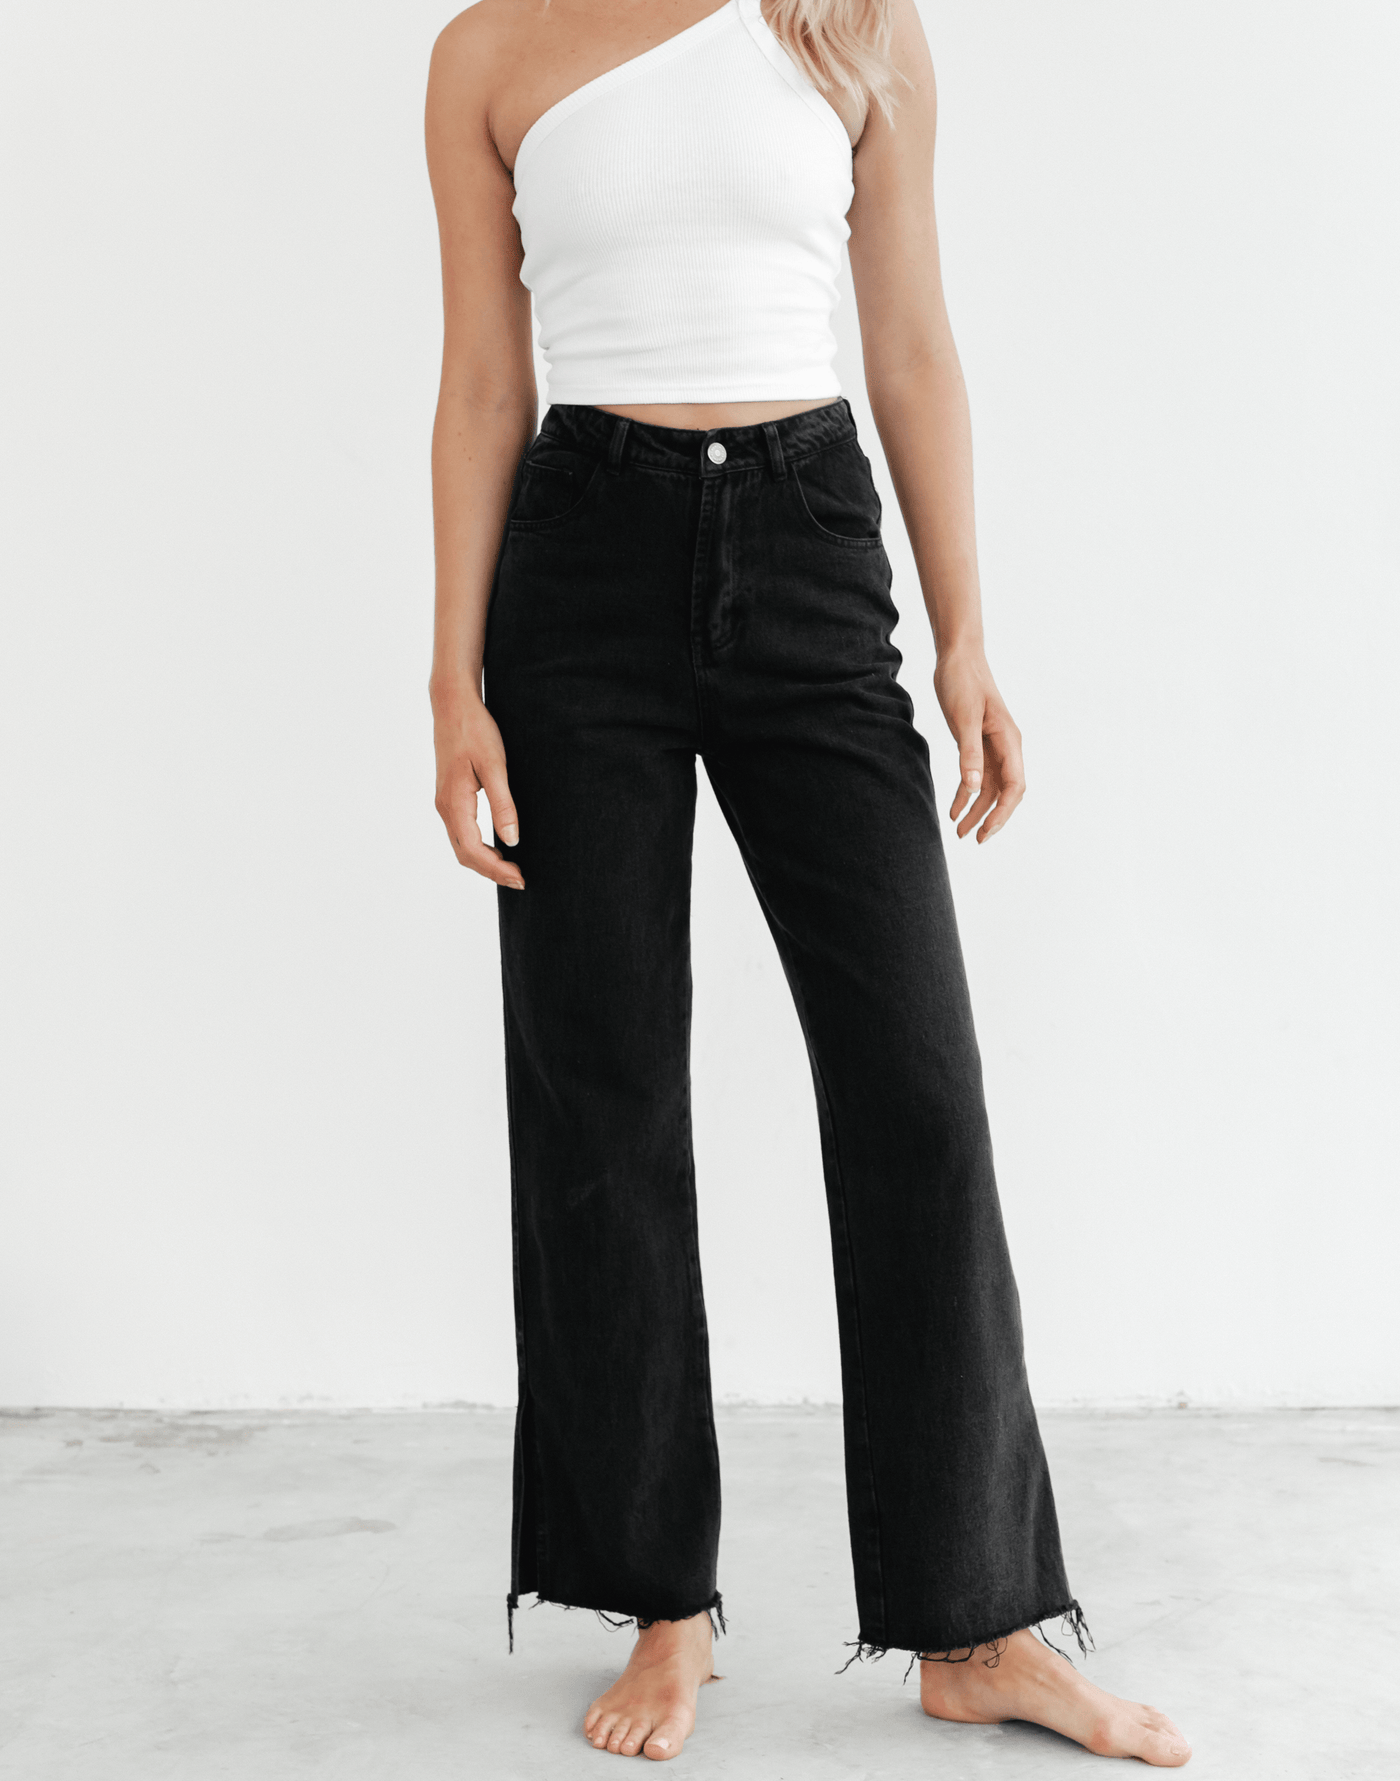 Ashton Jeans (Black) - Black High Waisted Jeans - Women's Pants - Charcoal Clothing